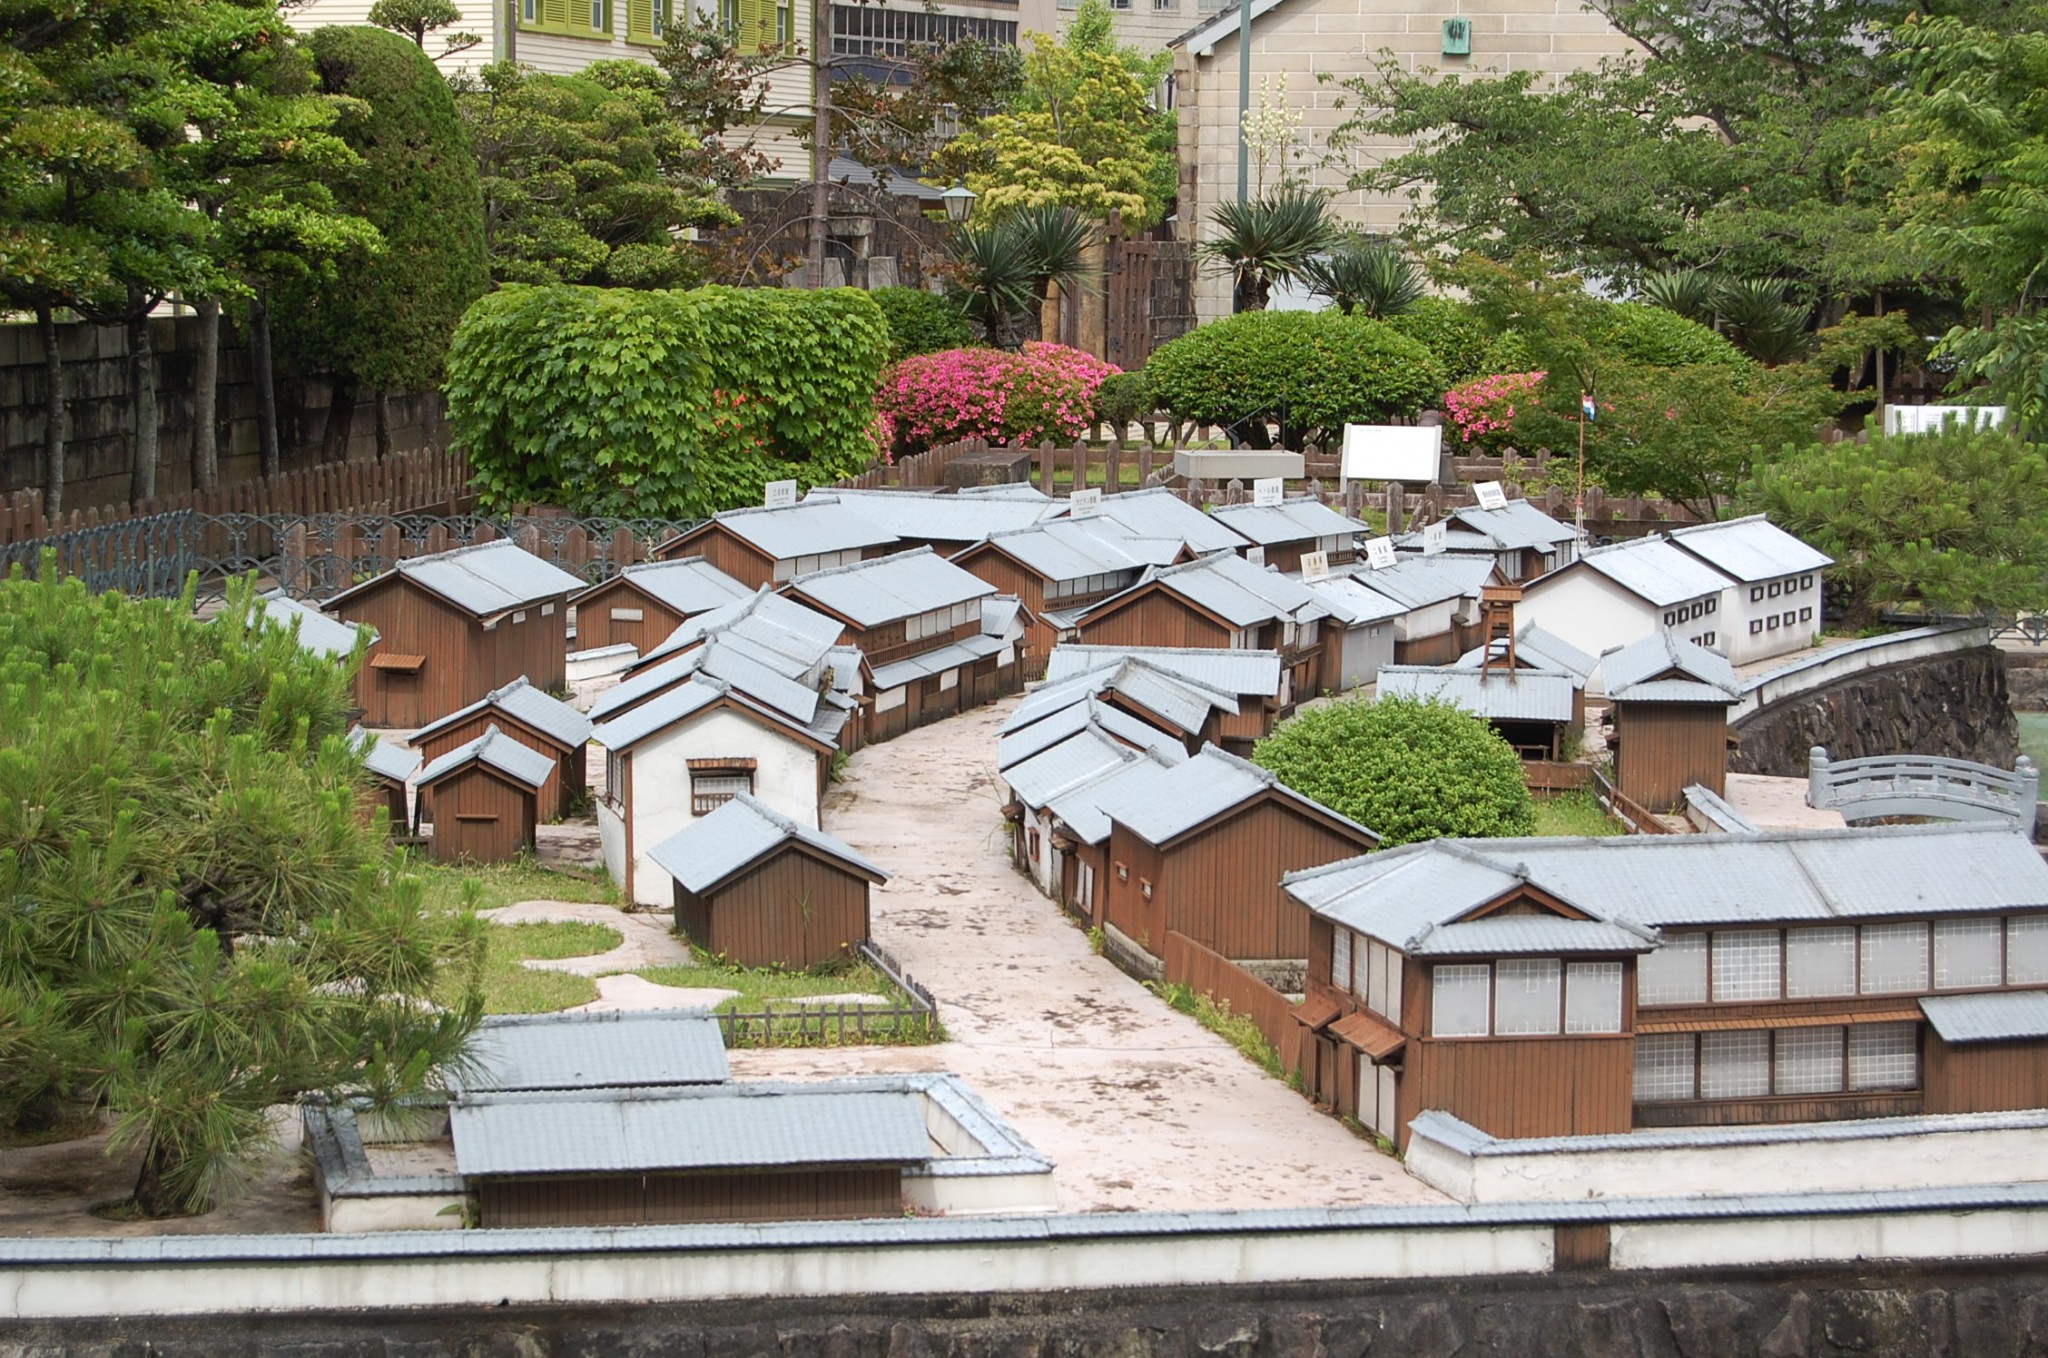 Dejima – an In-land island in the heart of Nagasaki